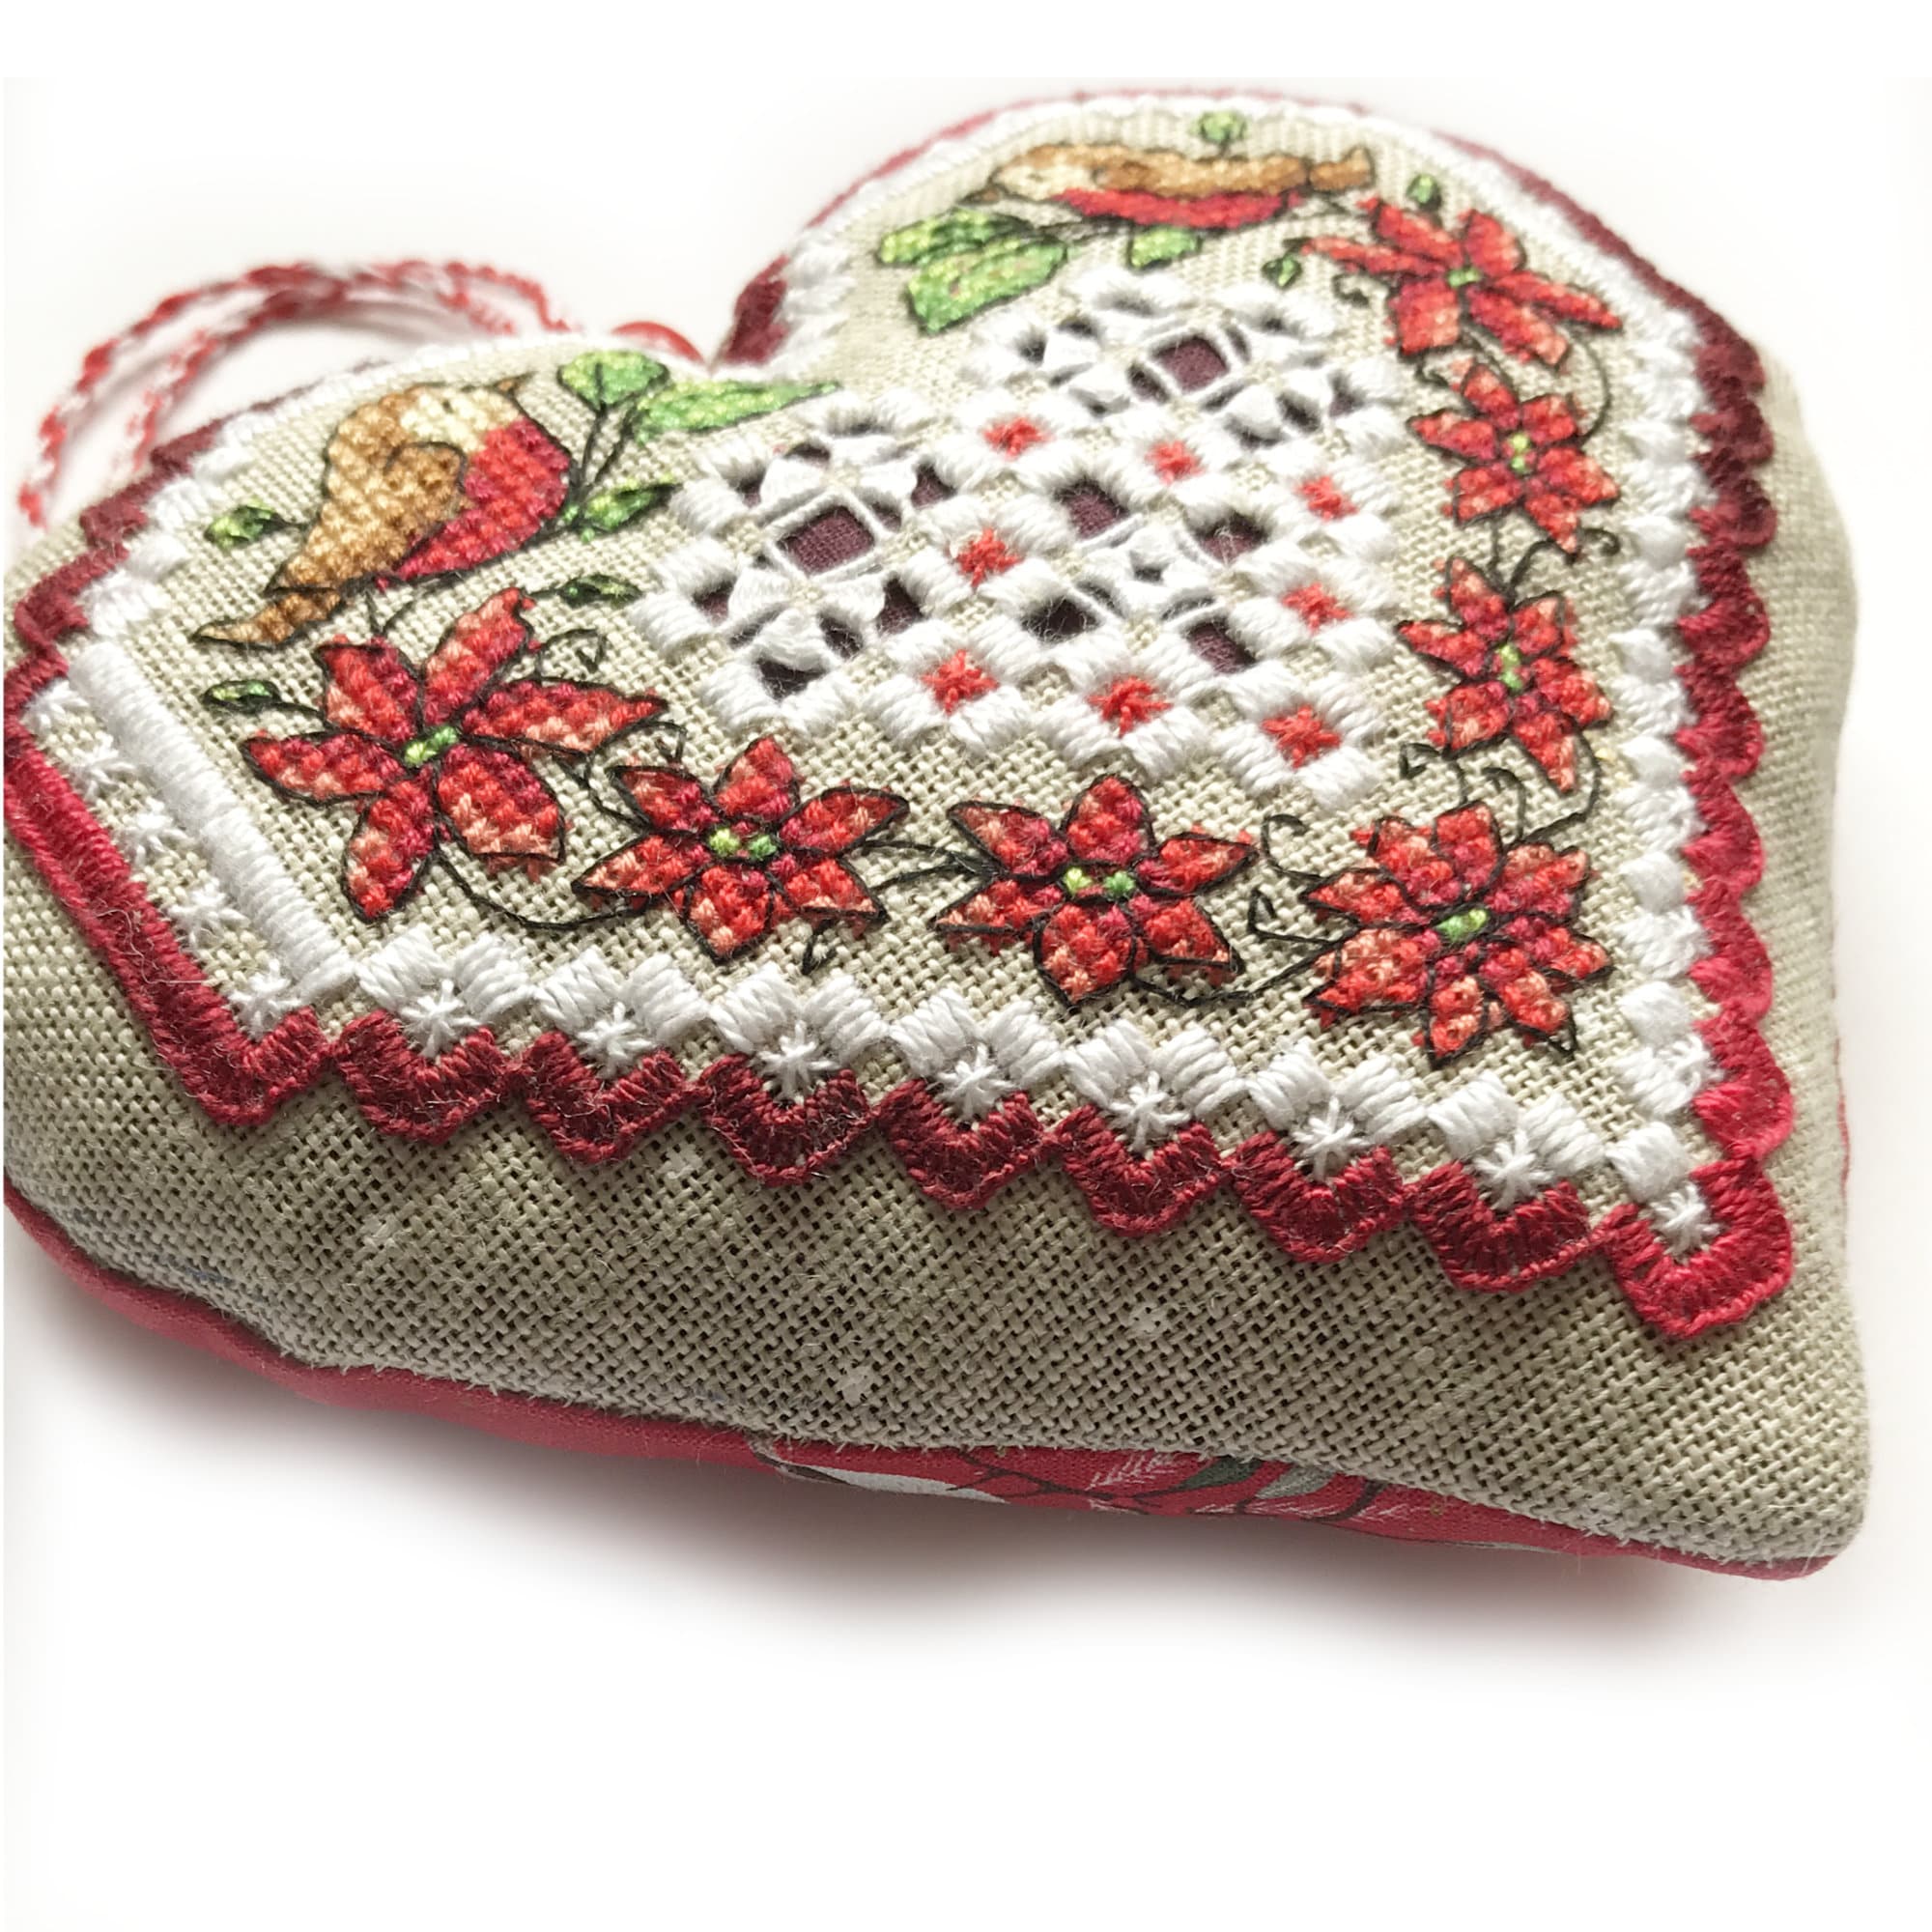 wood heart frame ornament cross stitch ornament